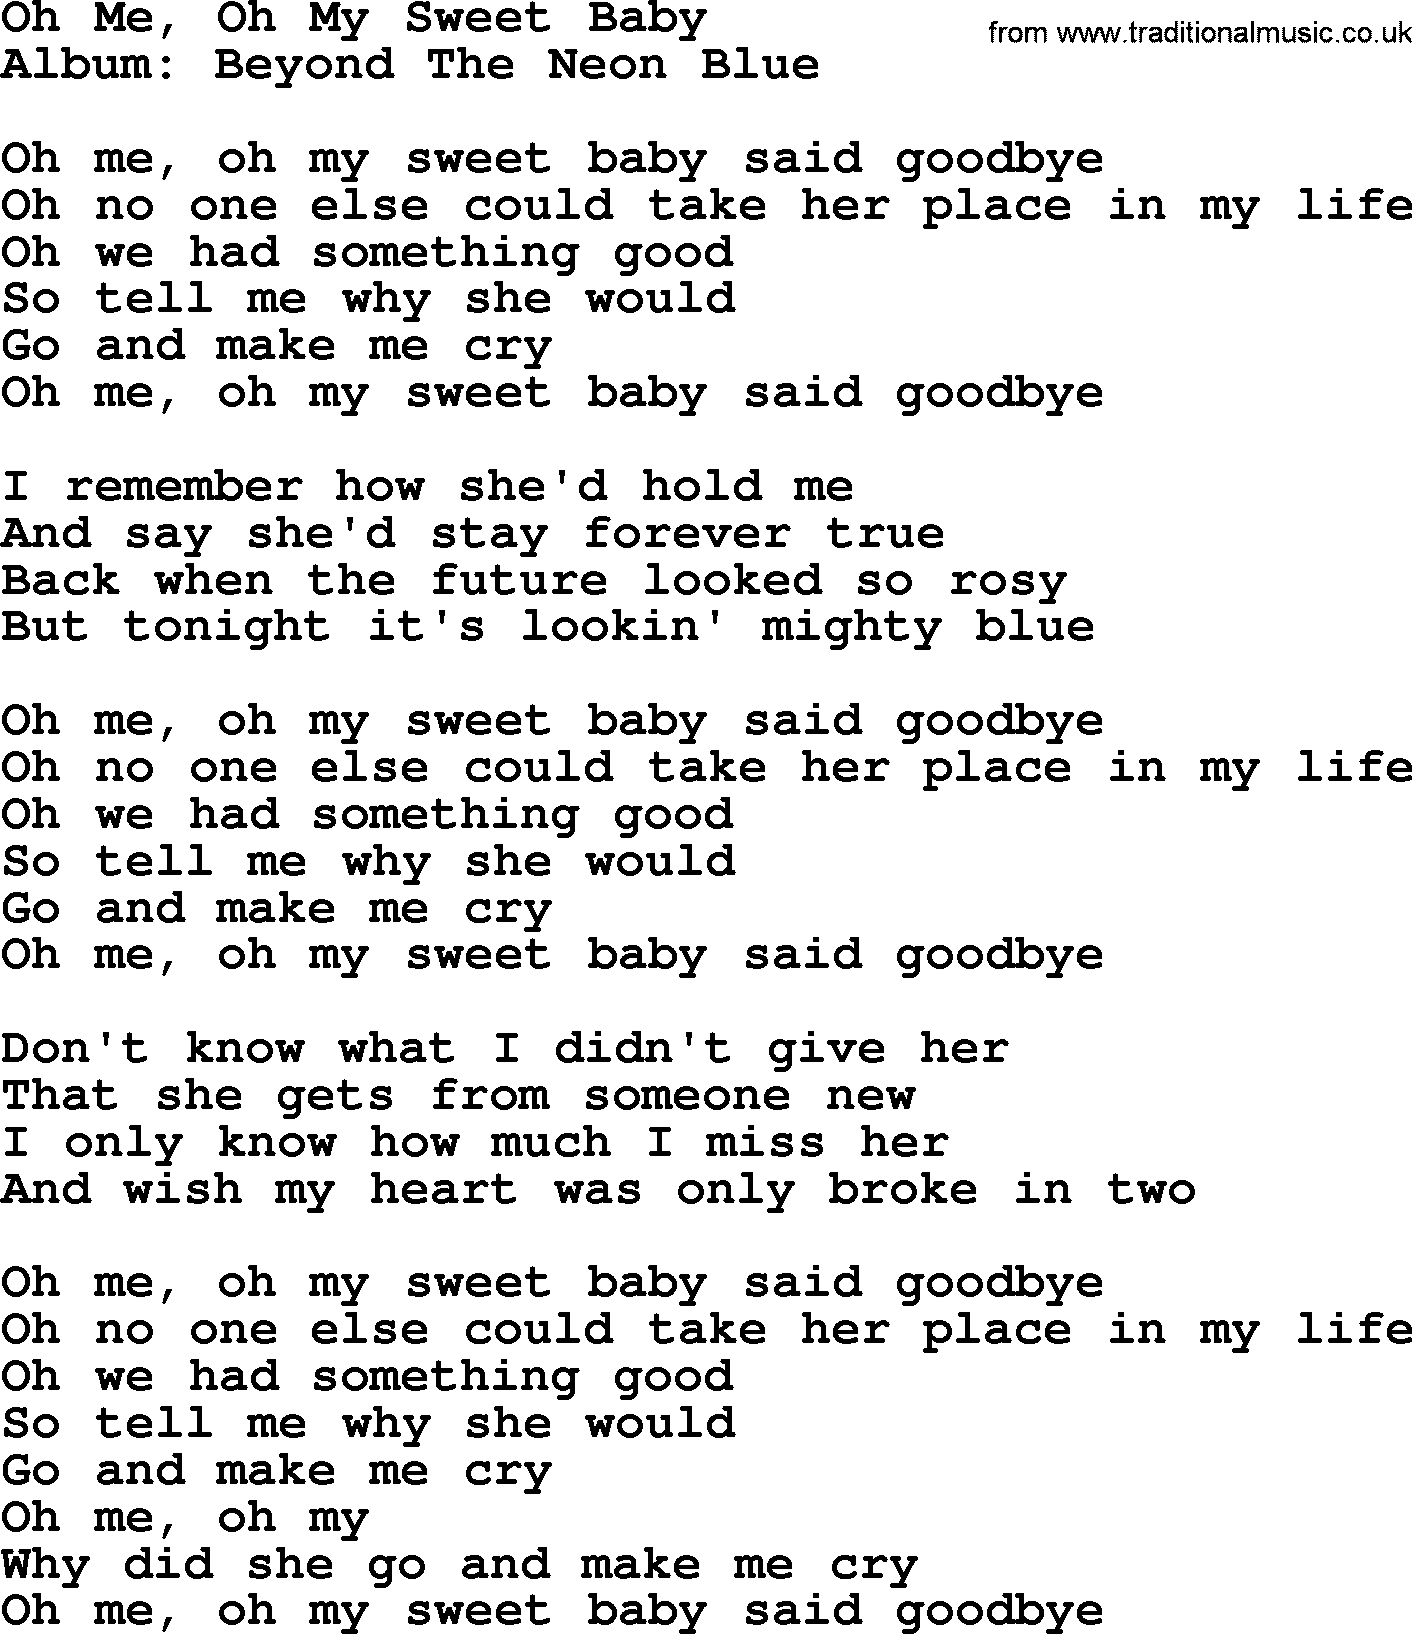 Oh Me, Oh My Sweet Baby, by George Strait - lyrics